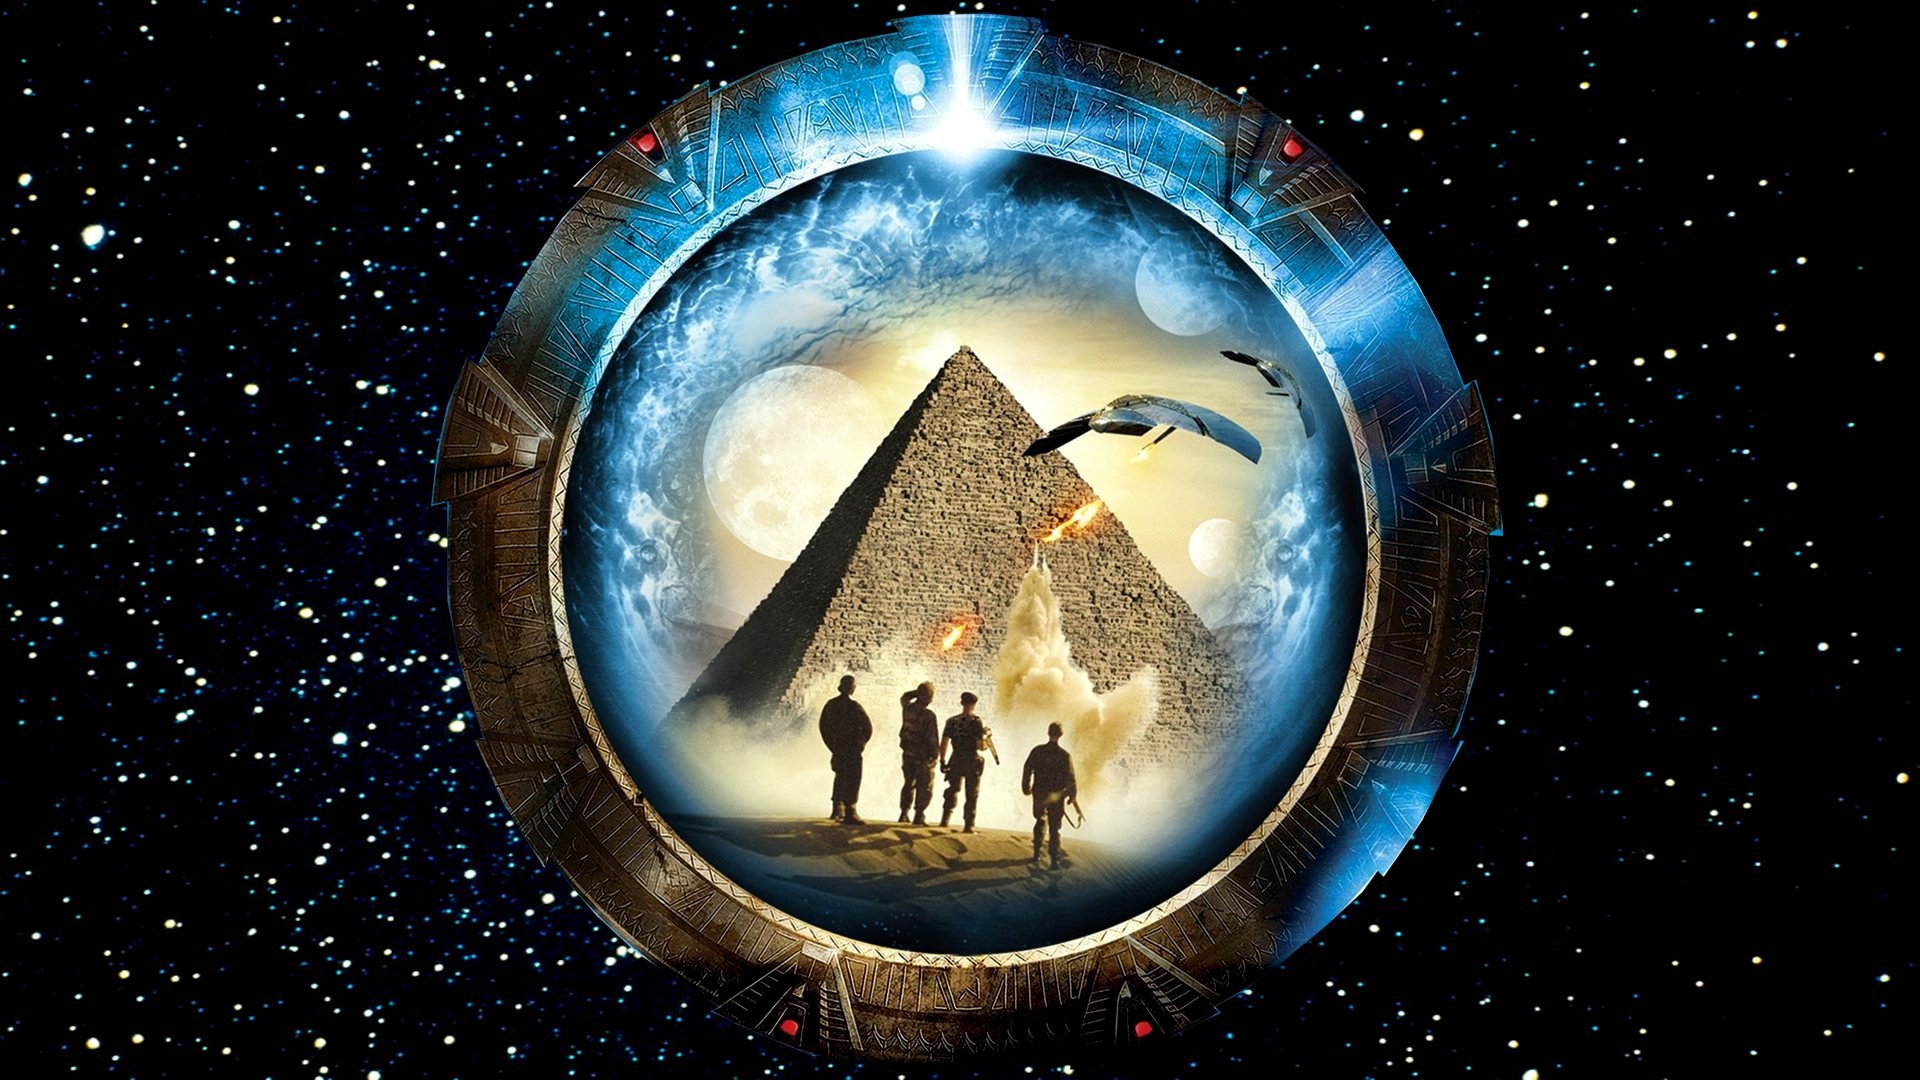 Orden cronológico para ver todo Stargate al completo